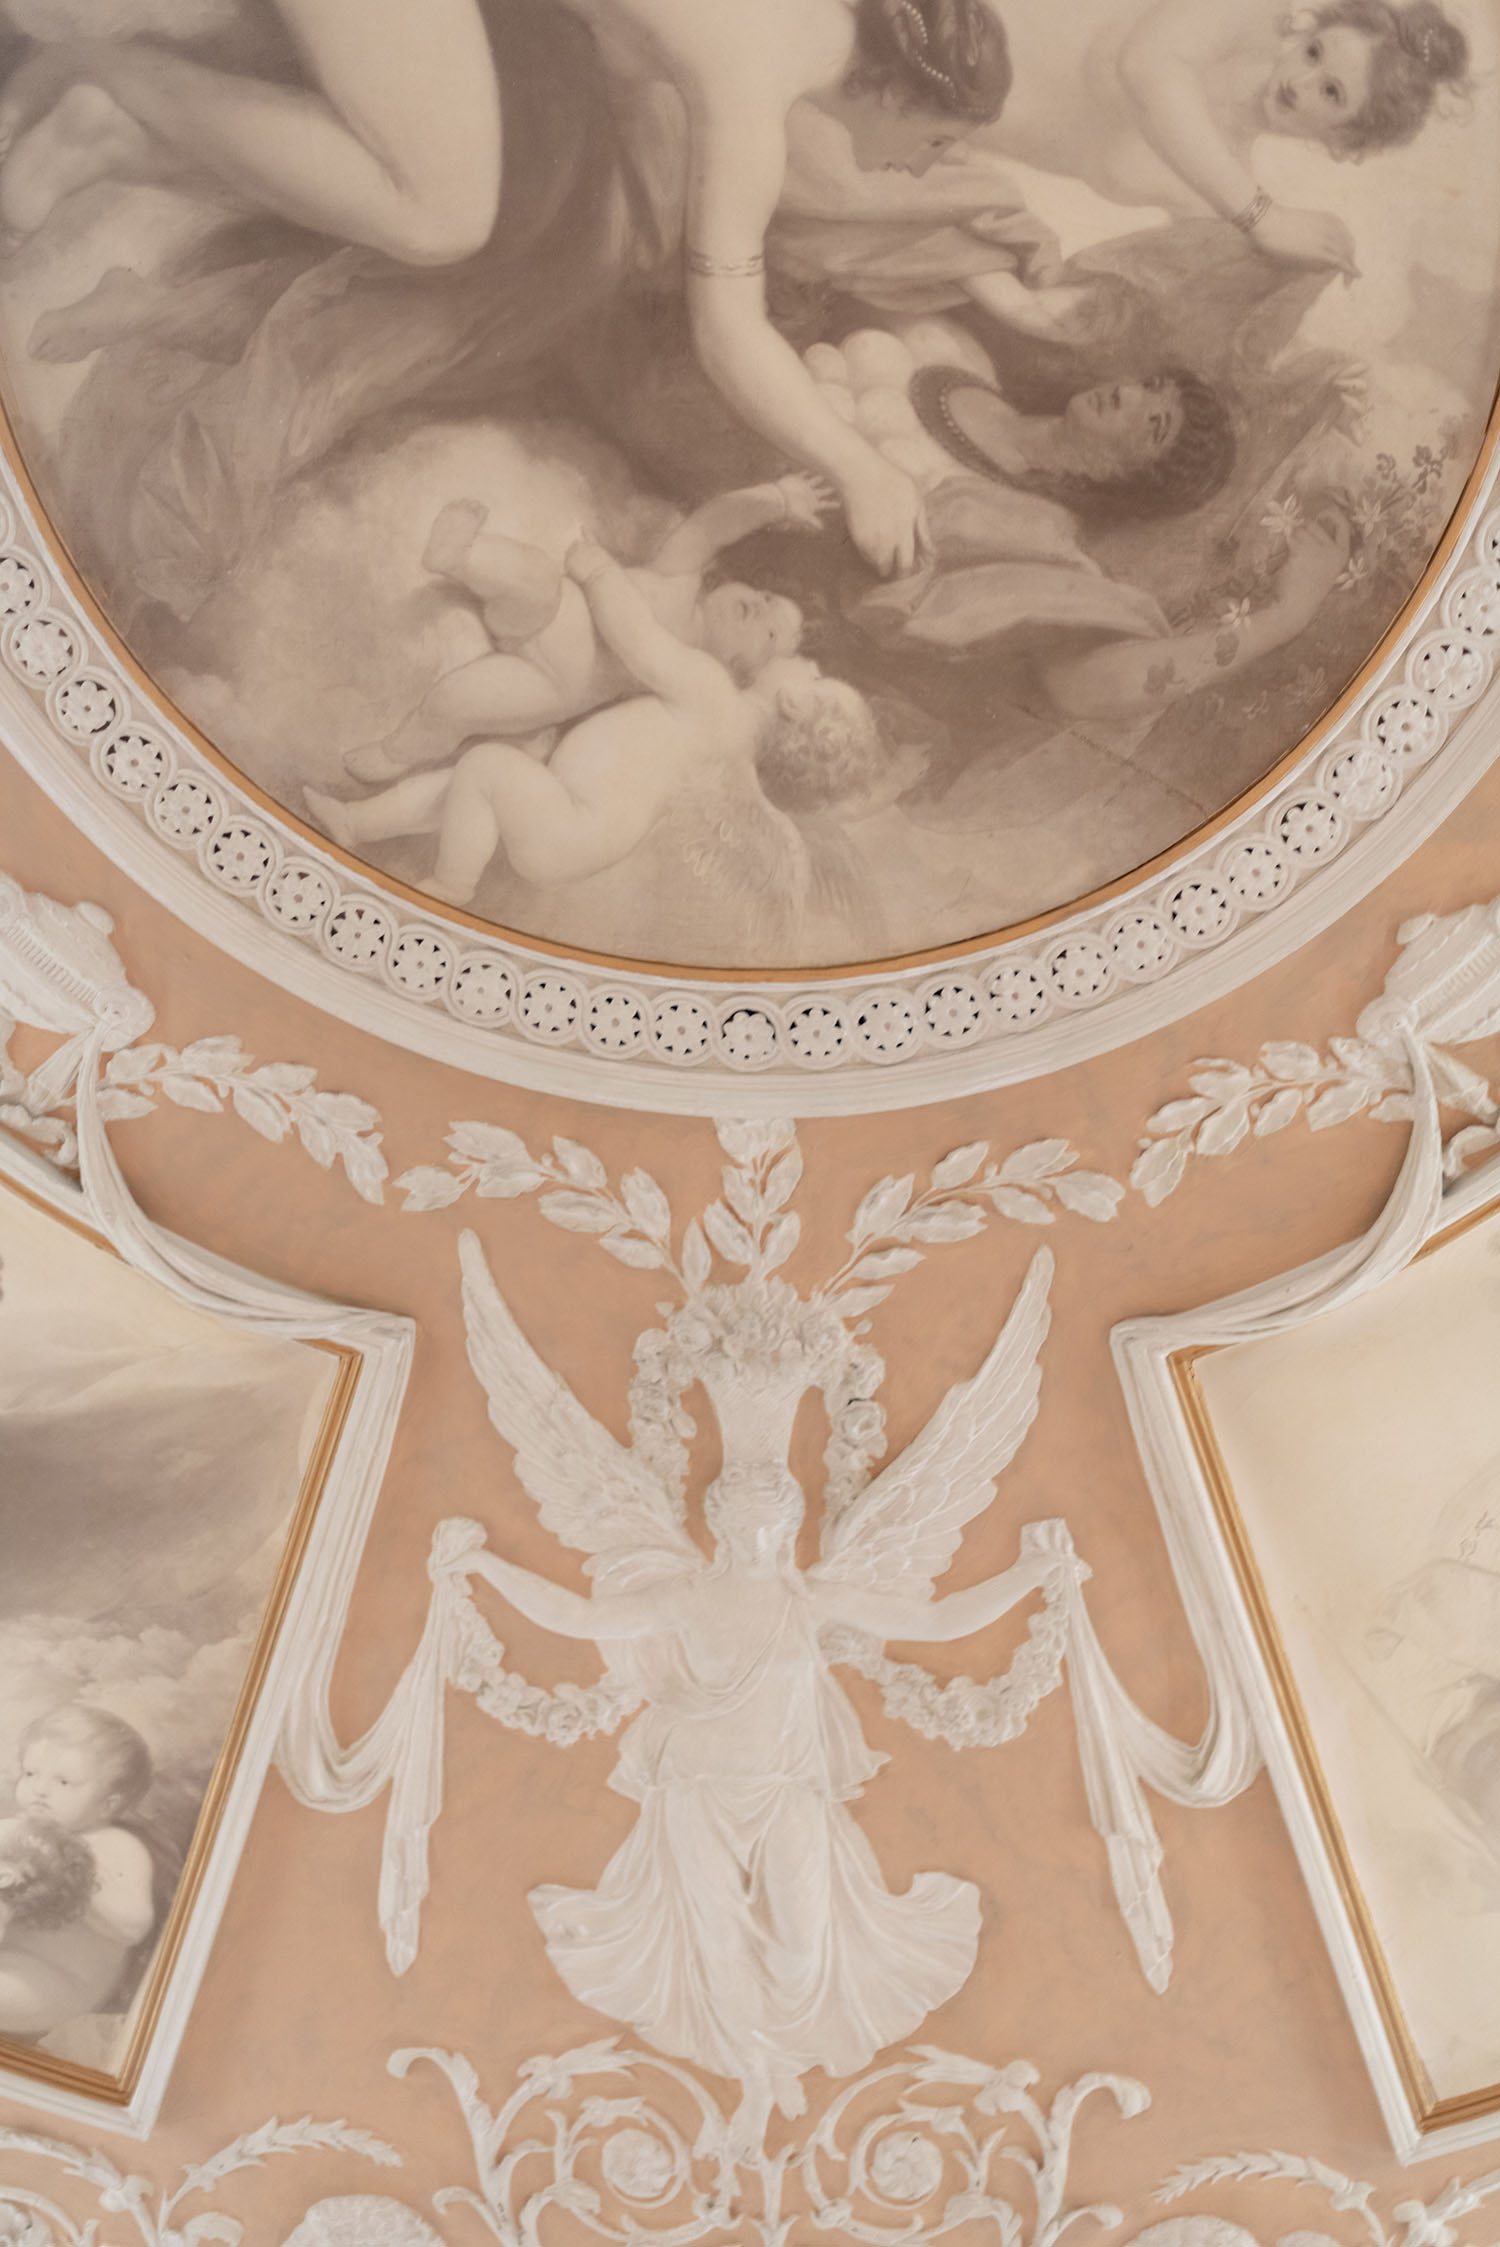 Coco & Vera - Belle époque ceiling frescos at the Cortauld Gallery in London